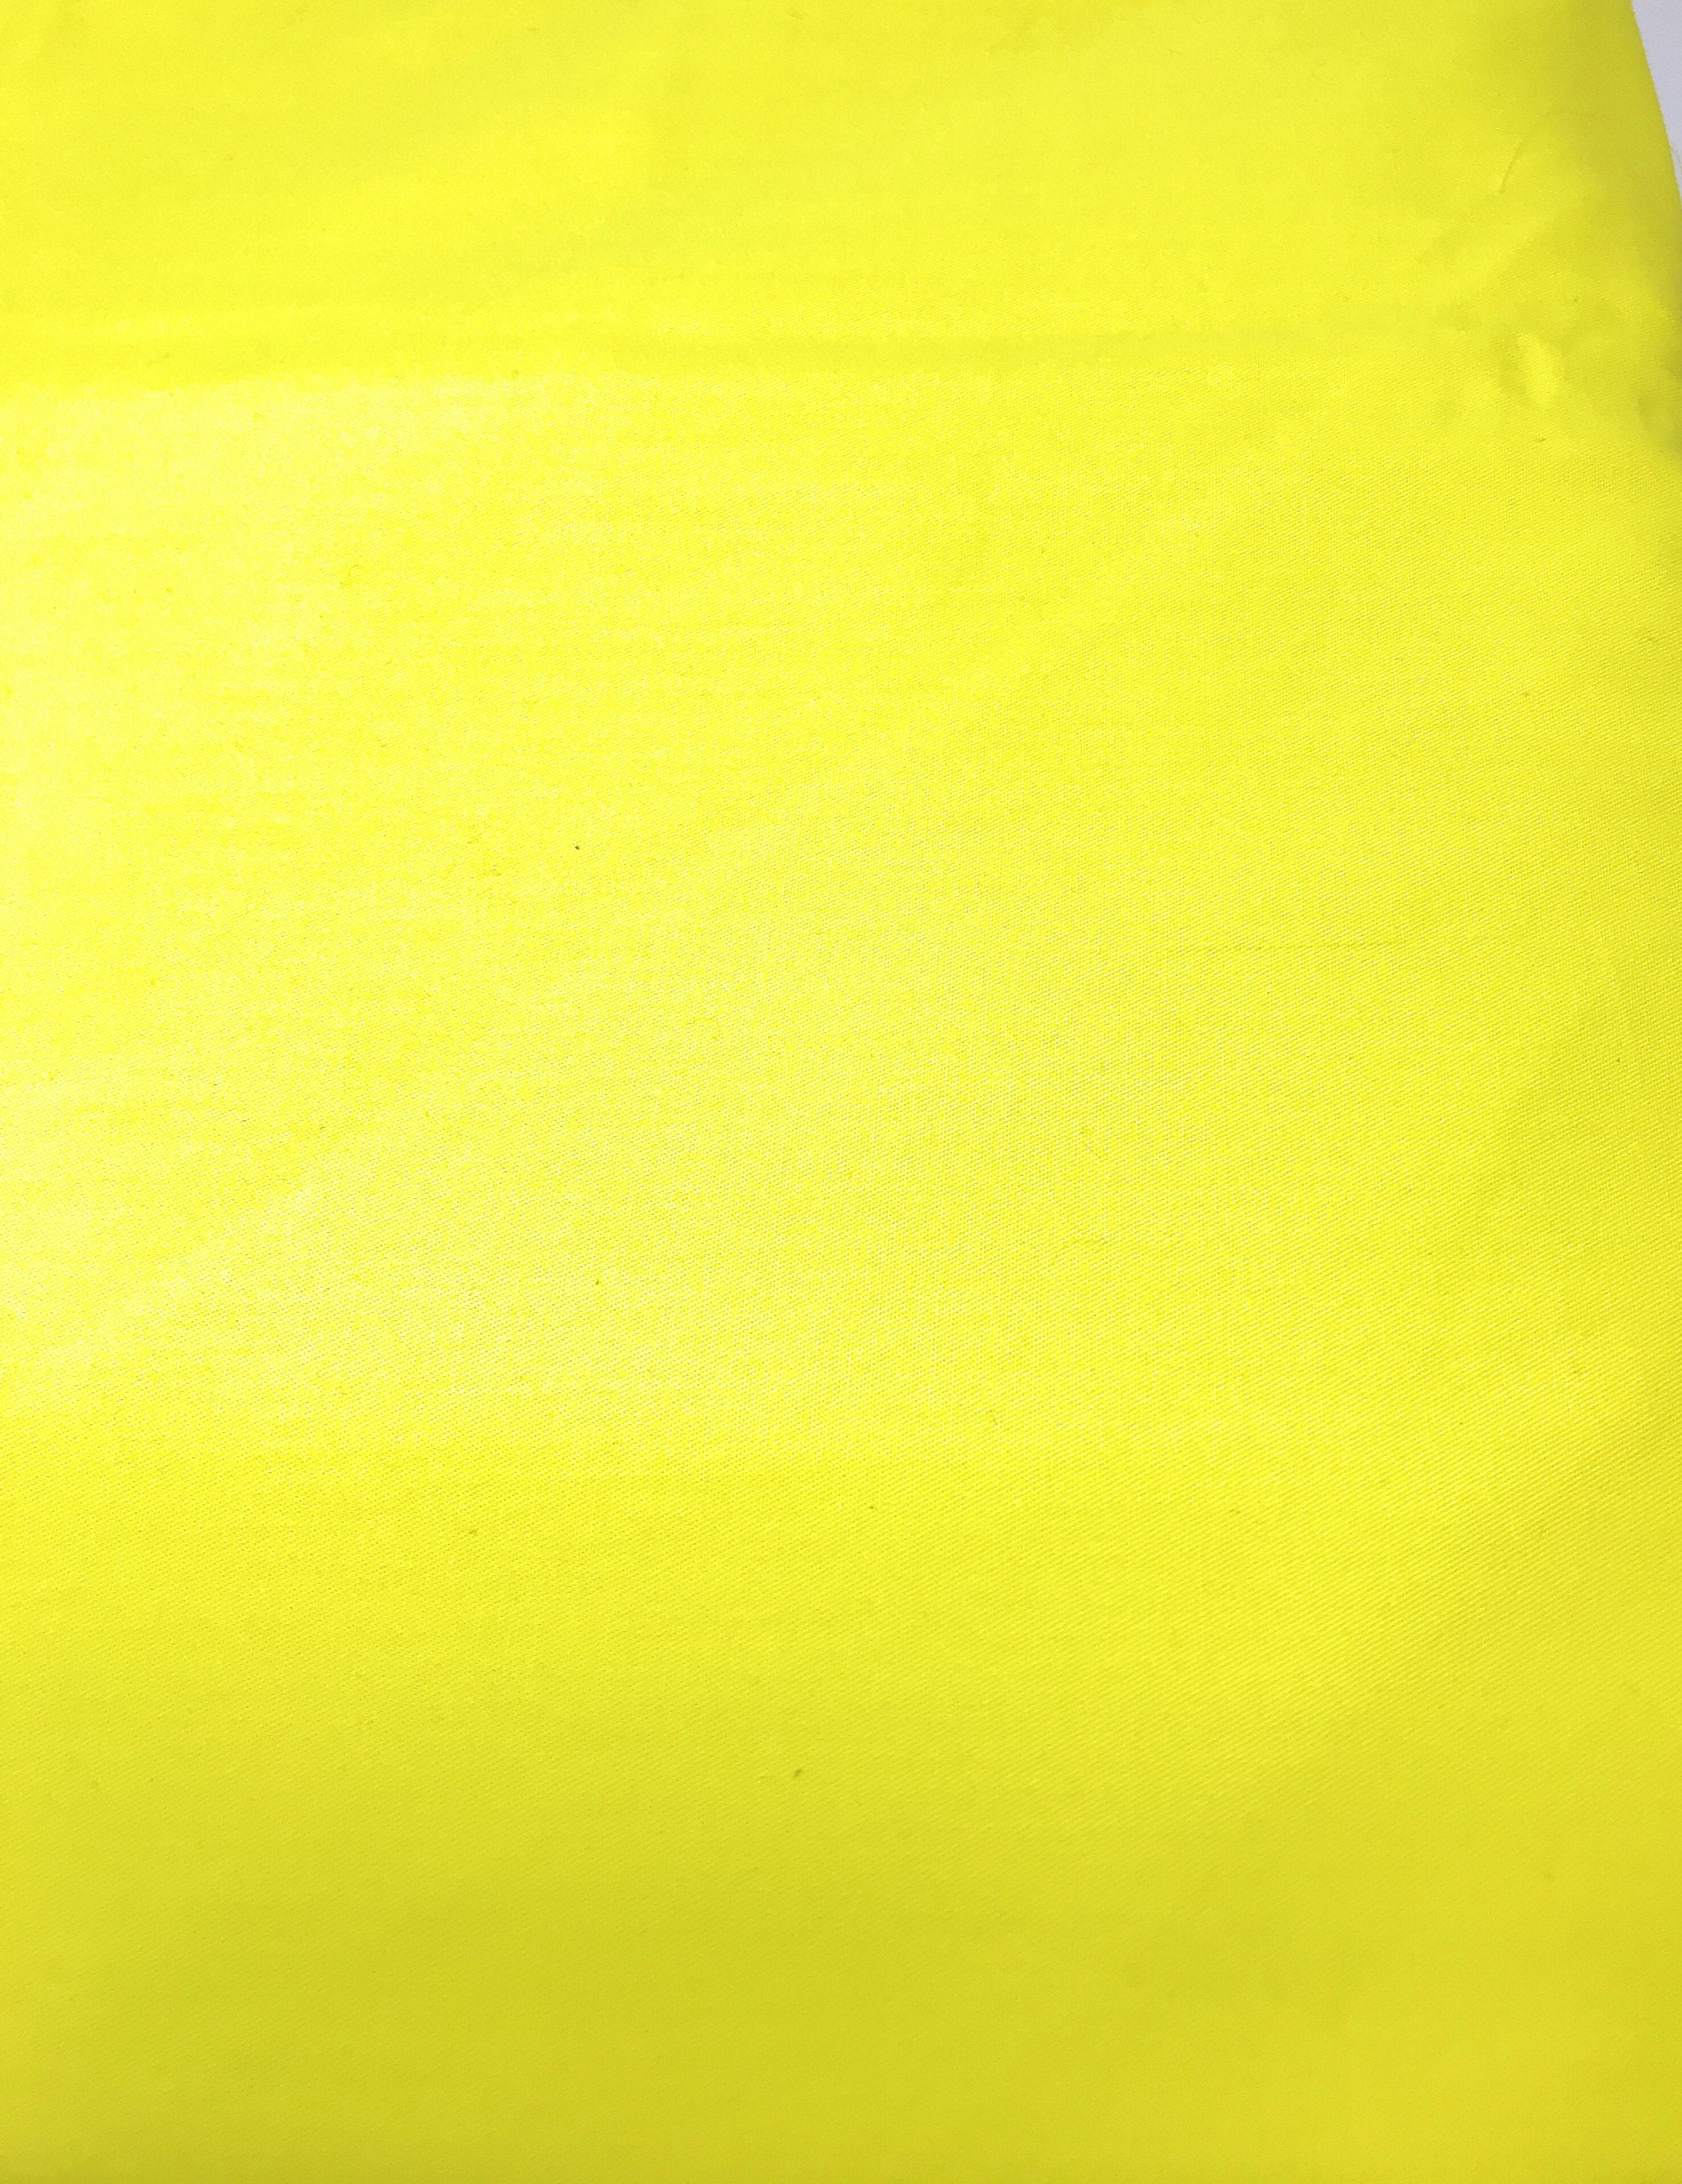 Tache Cotton Bright Lemon Neon Yellow Fitted Sheet (BS3PC-YY) - Tache Home Fashion